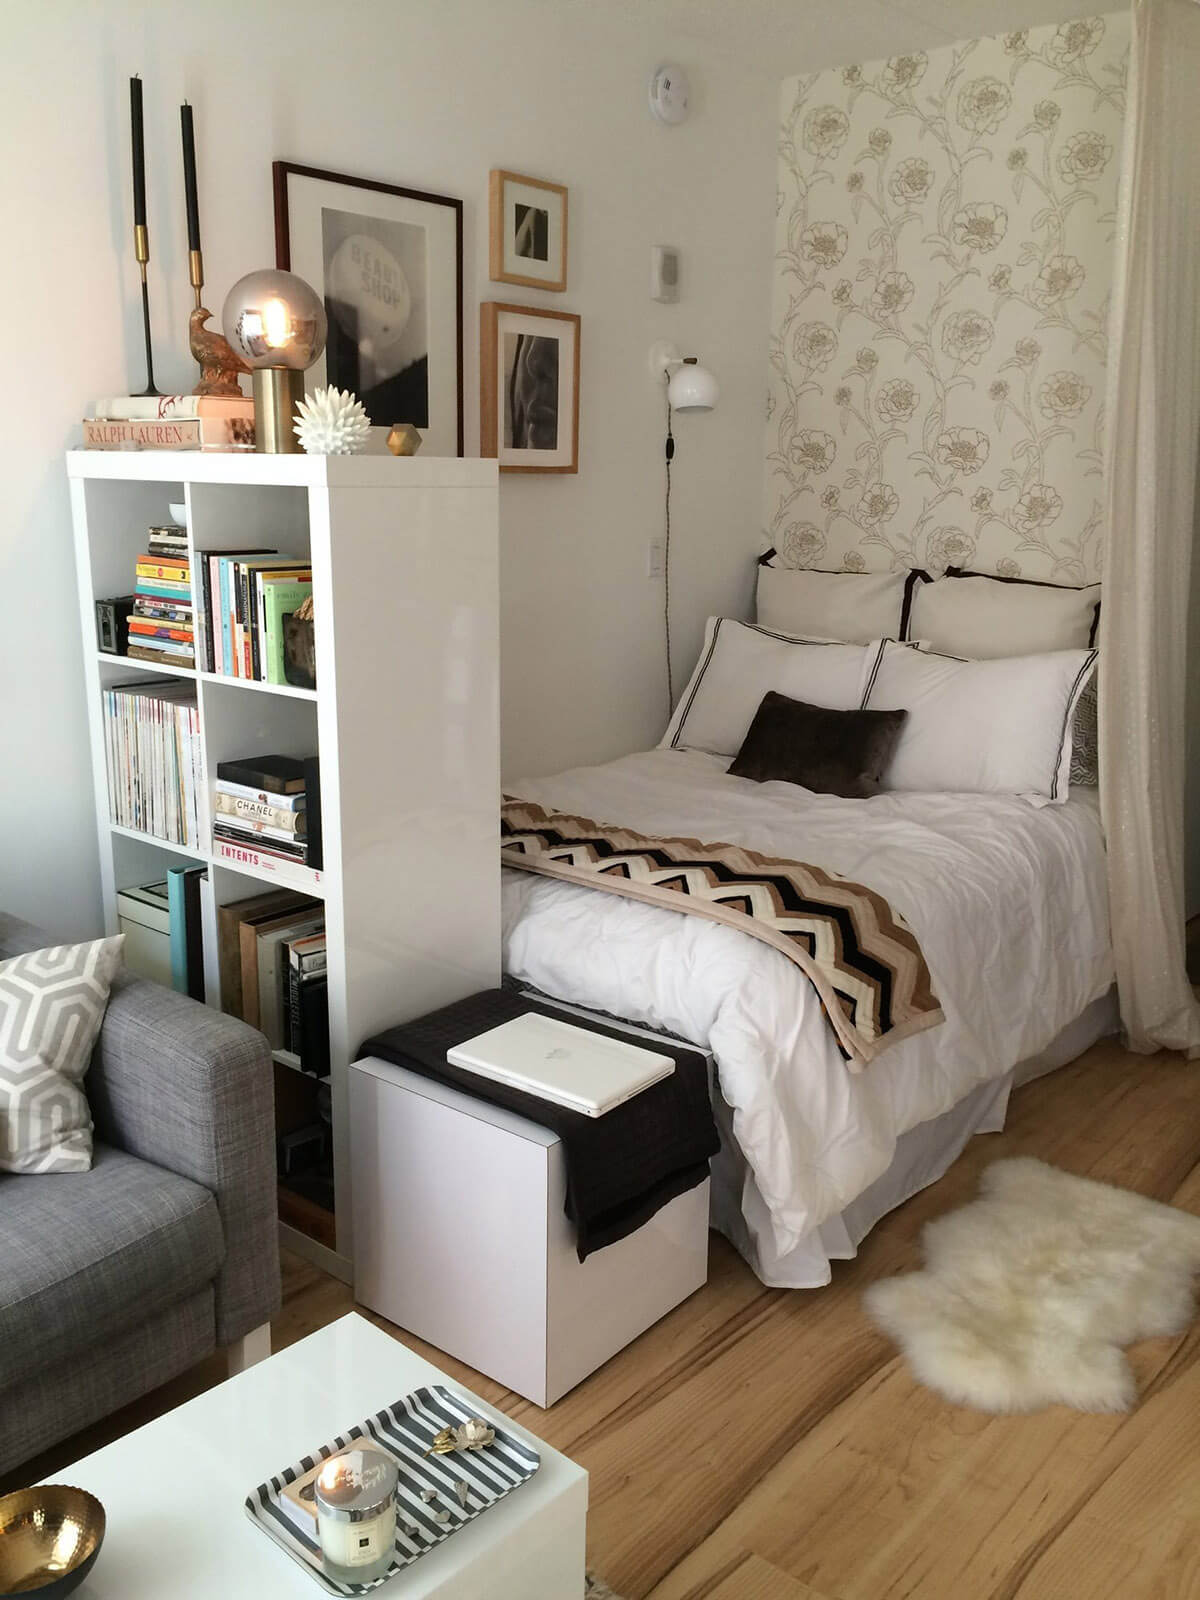 Tiny single bedroom designs